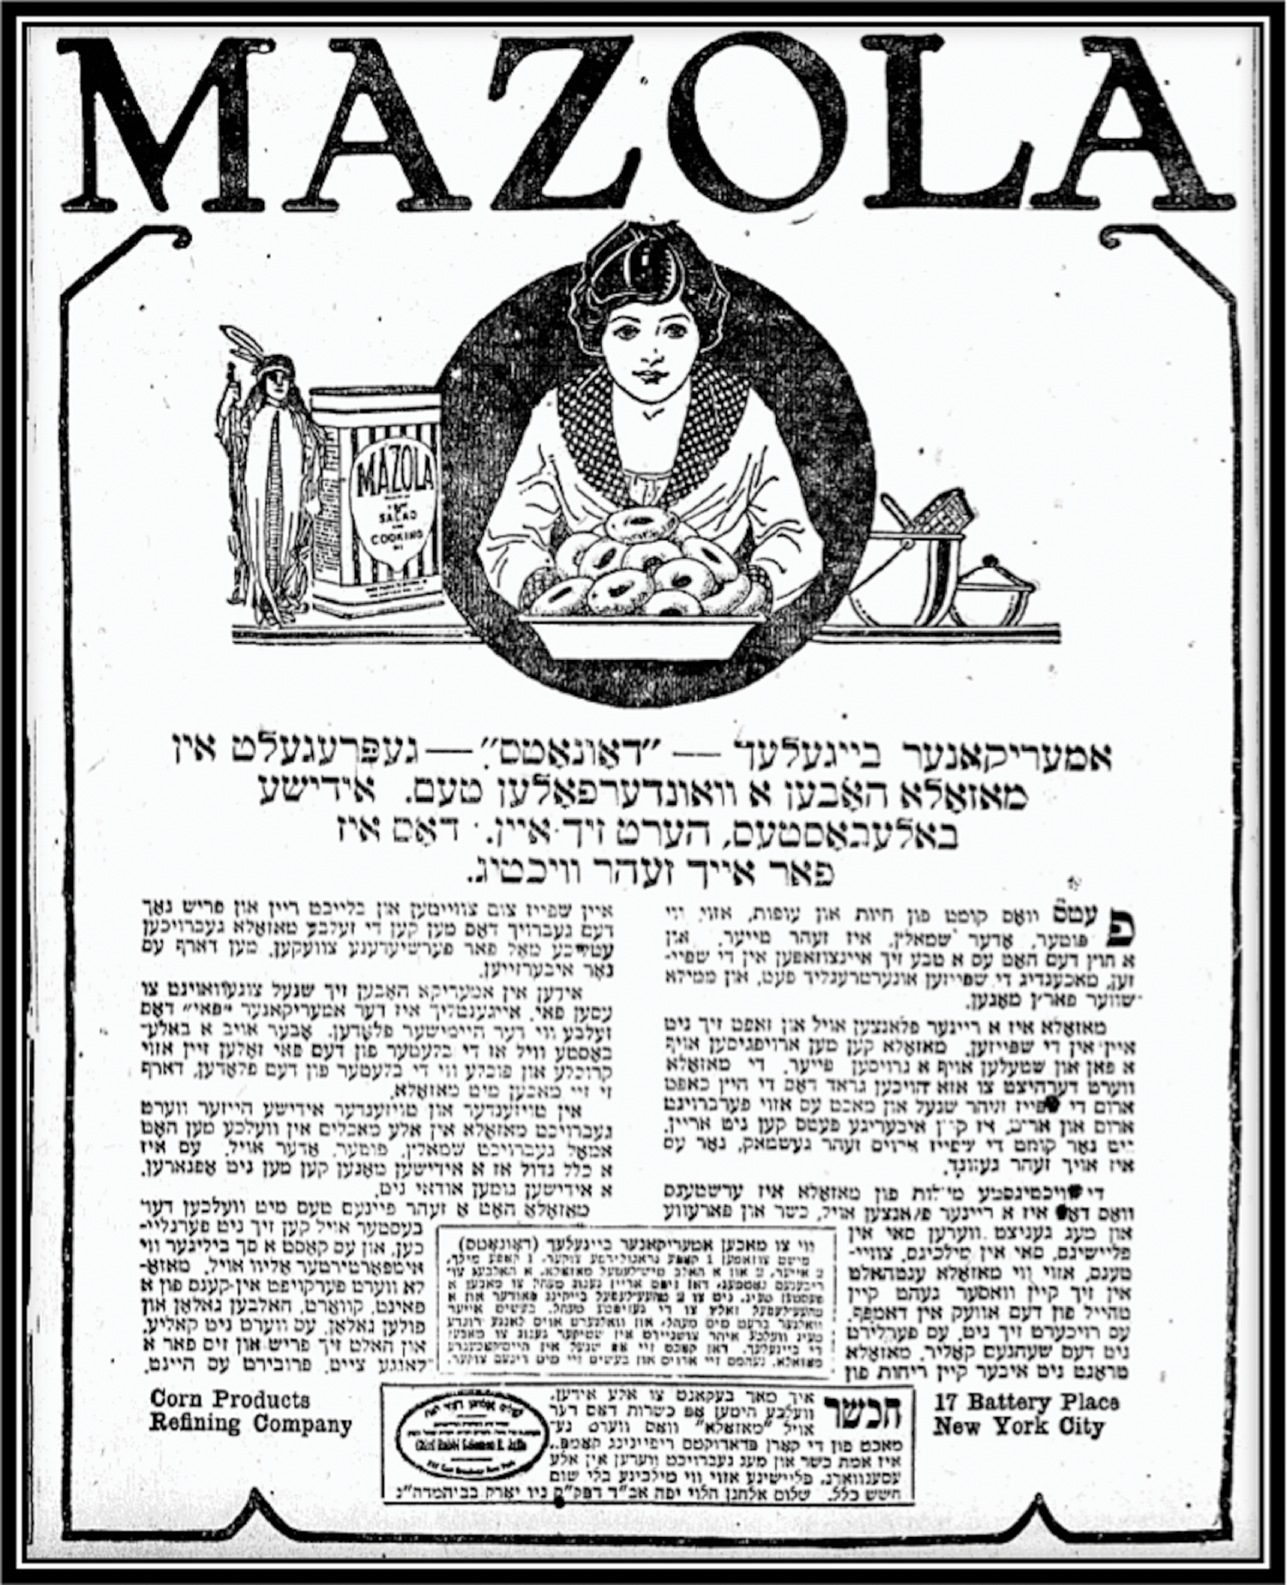 Finding My Chutzpah: Using Yiddish to Reconstruct my Jewish Identity